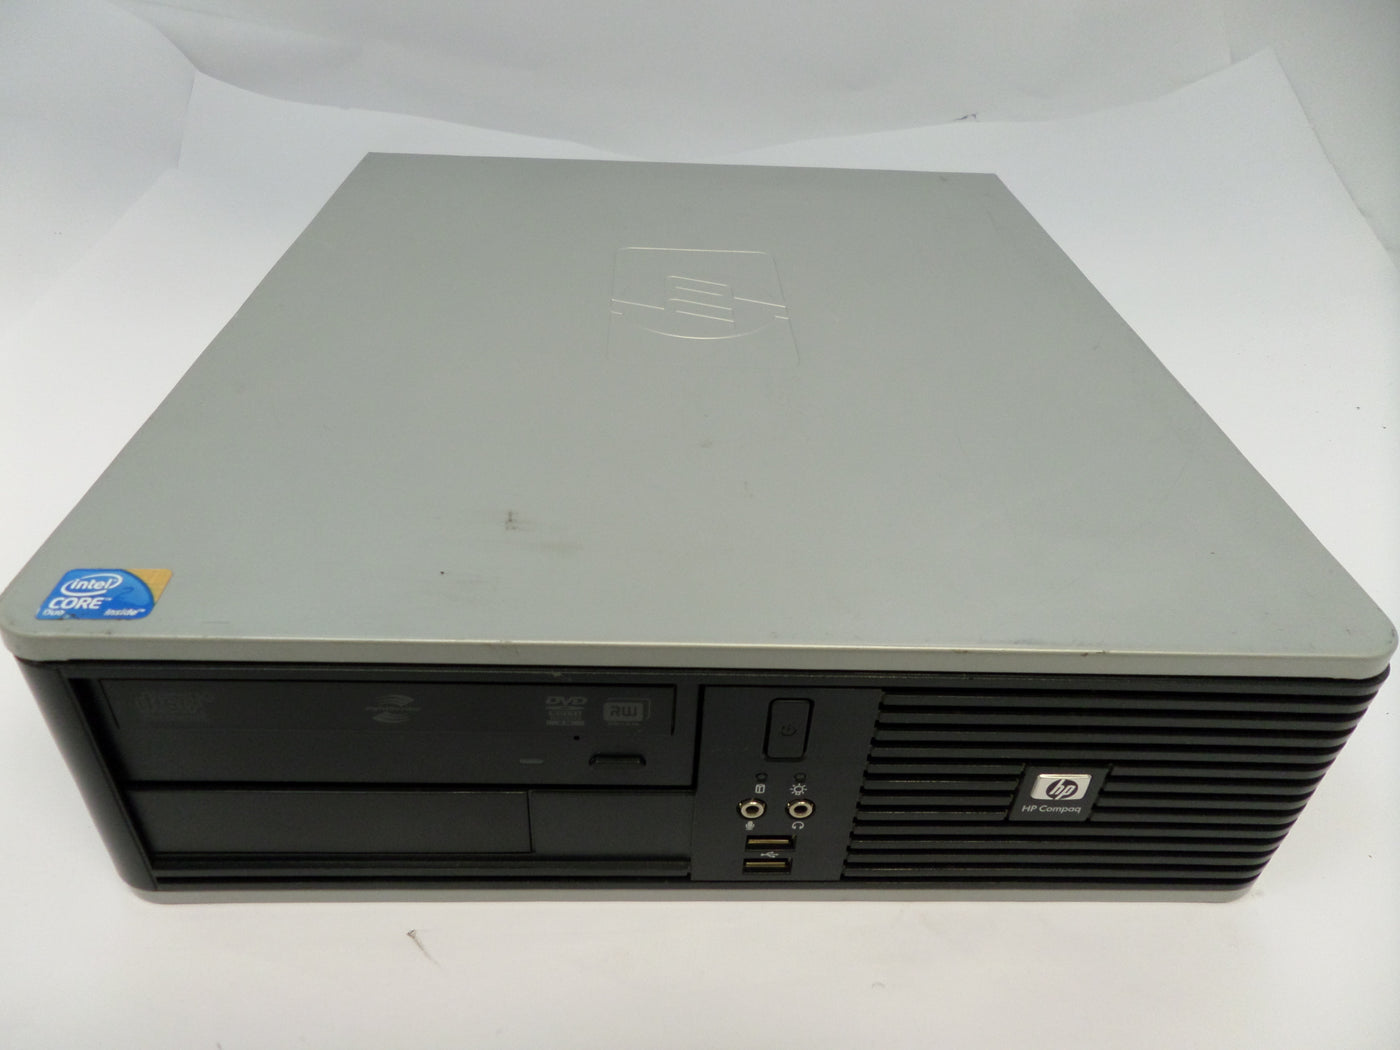 PR24409_KP721AV_HP Compaq DC7900 SFF PC - Image3